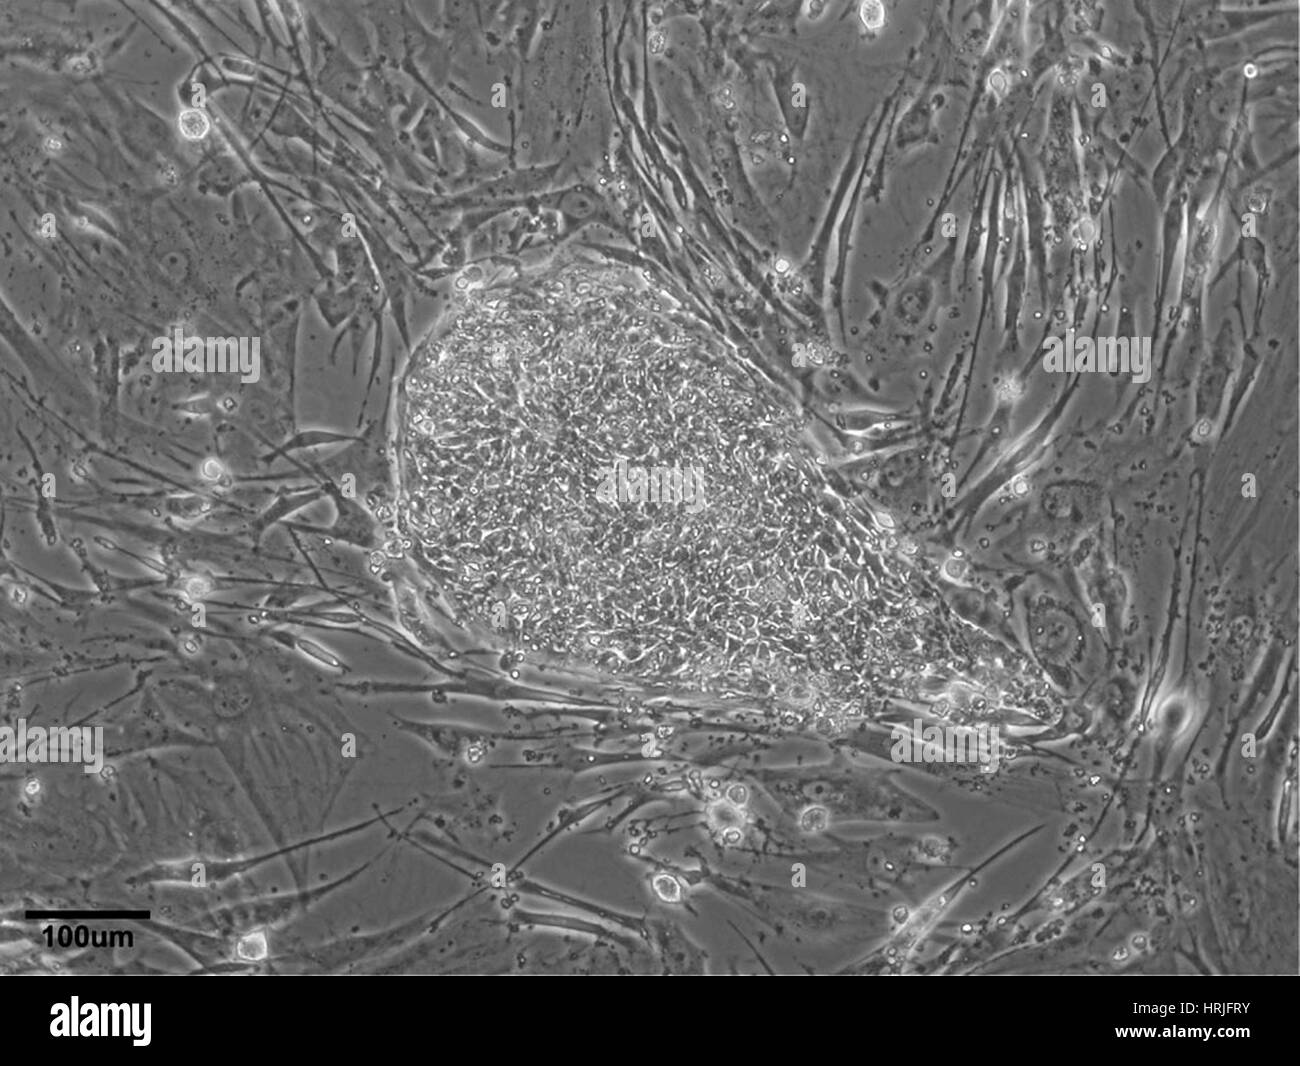 Human Embryonic Stem Cell Line WA01 Stock Photo